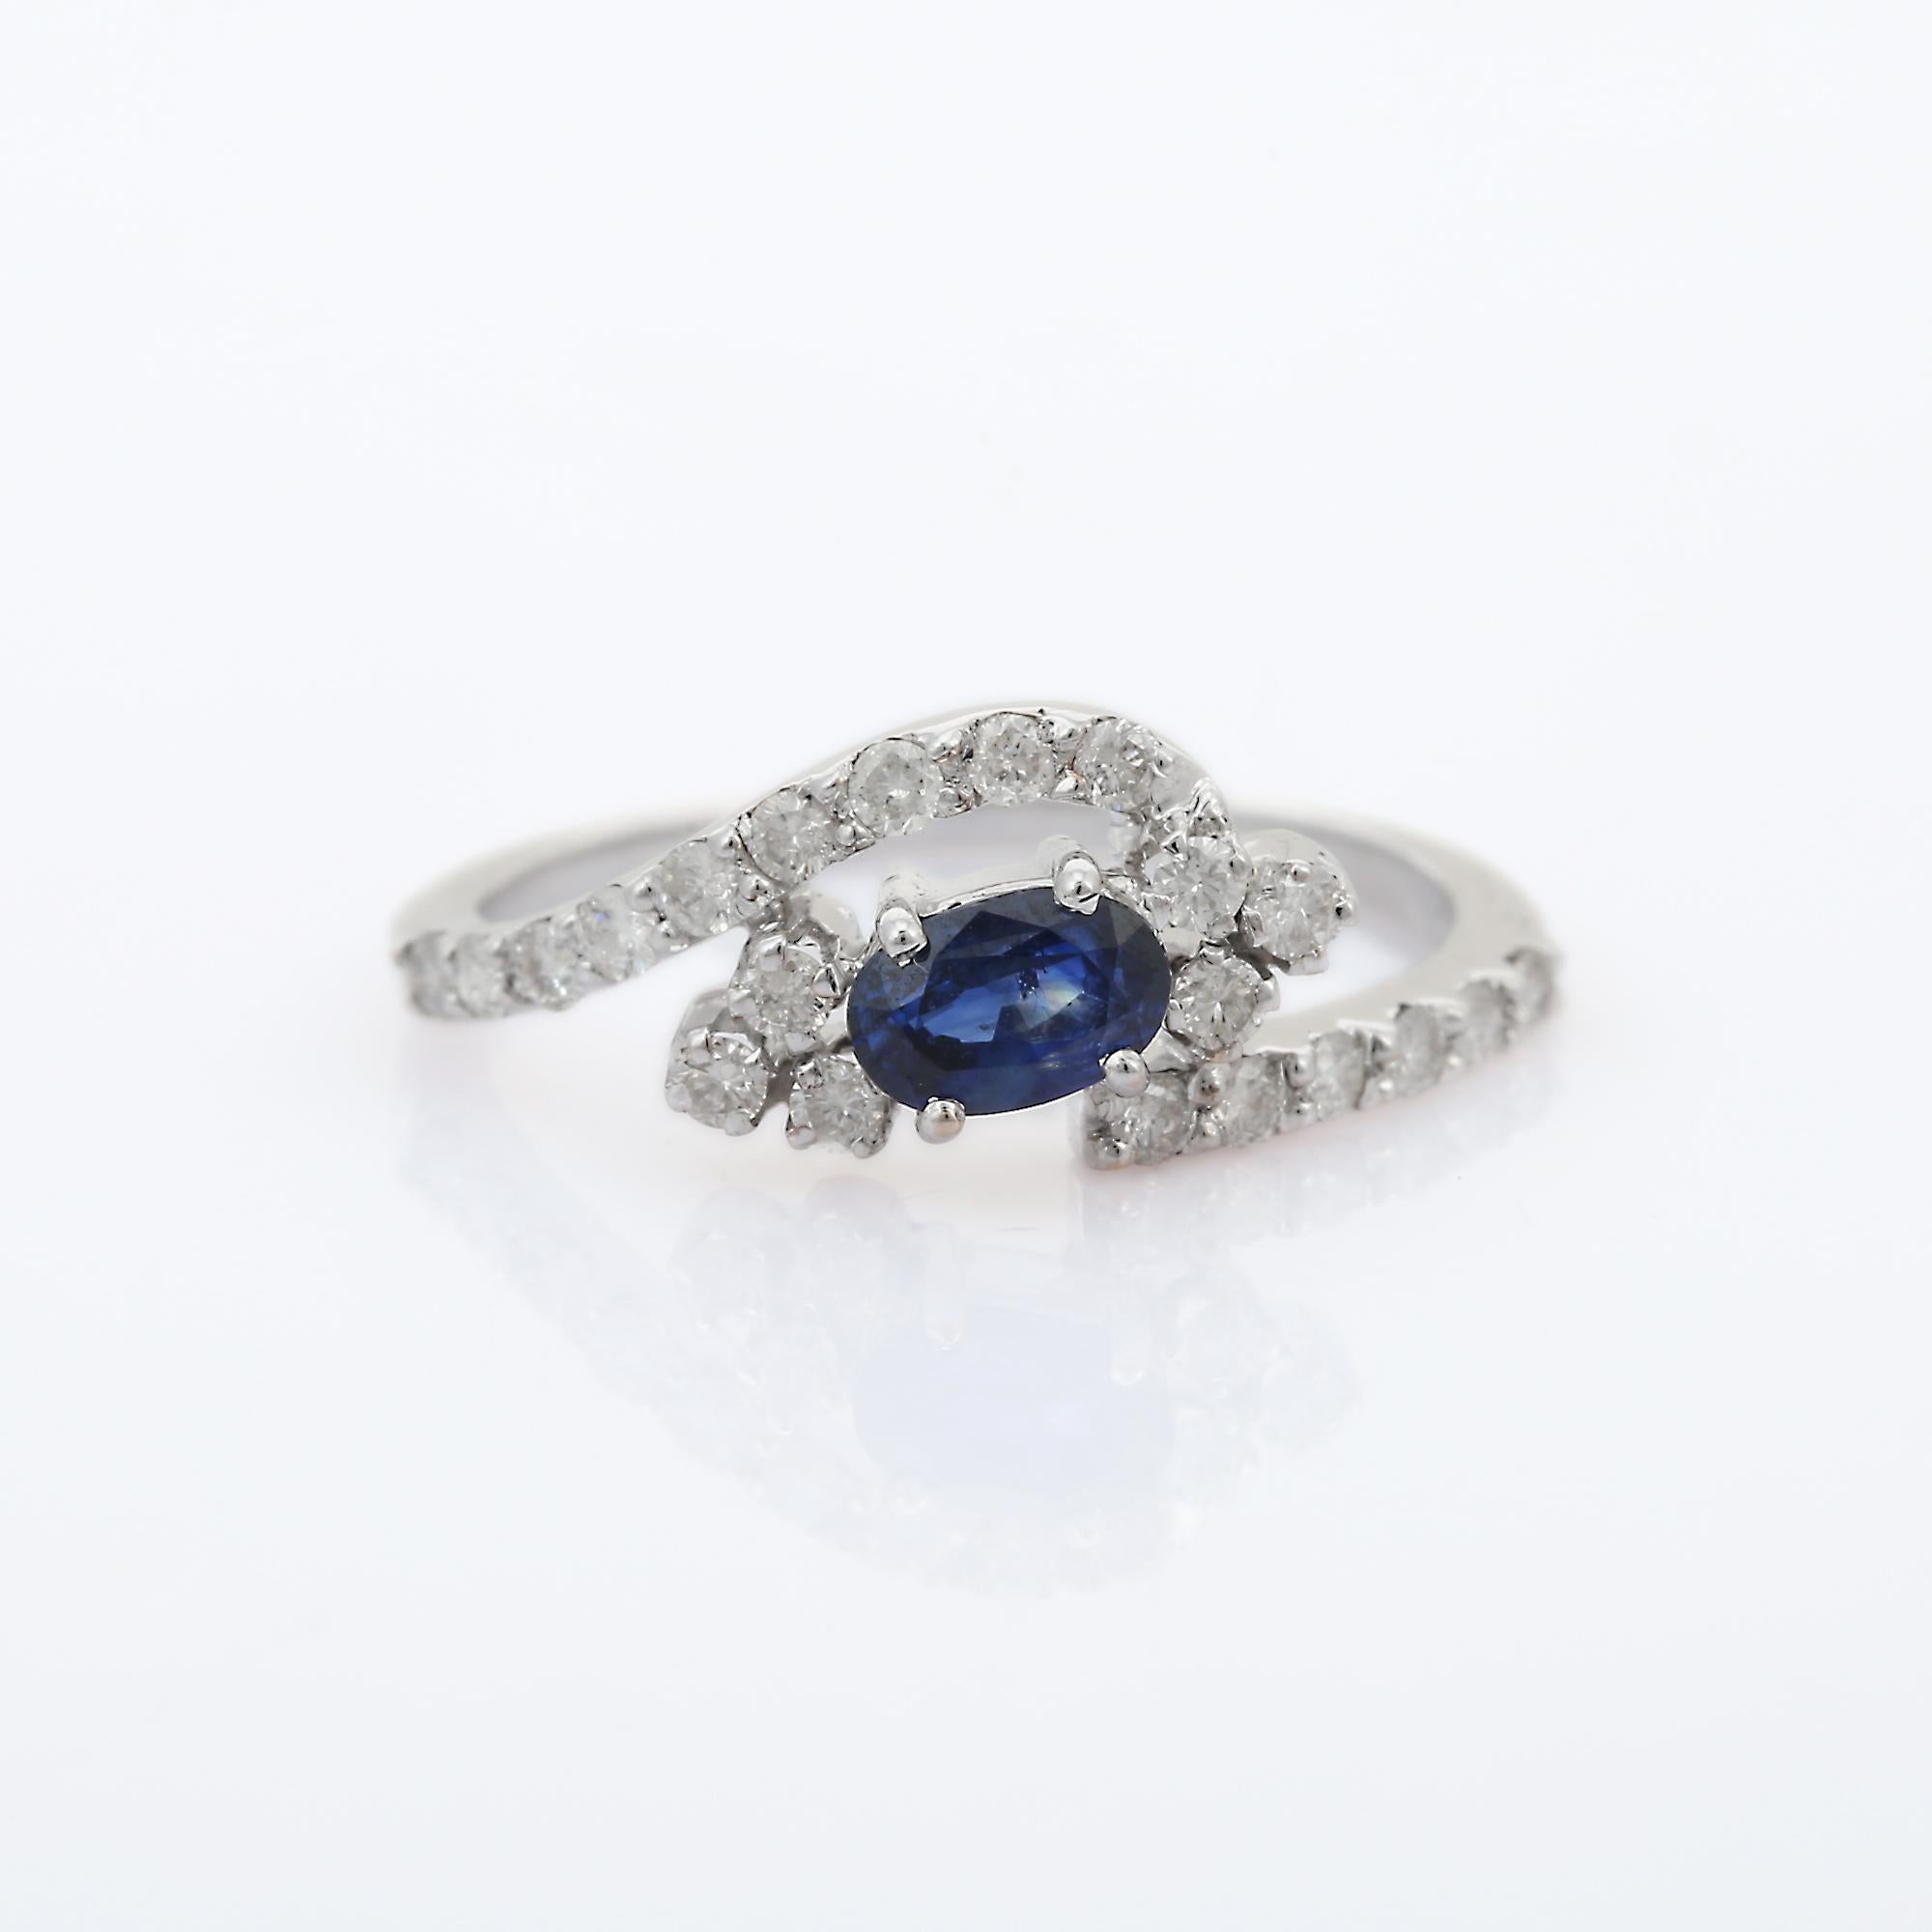 For Sale:  Art Nouveau Style Women Diamond Blue Sapphire Wedding Ring in 14K White Gold 2